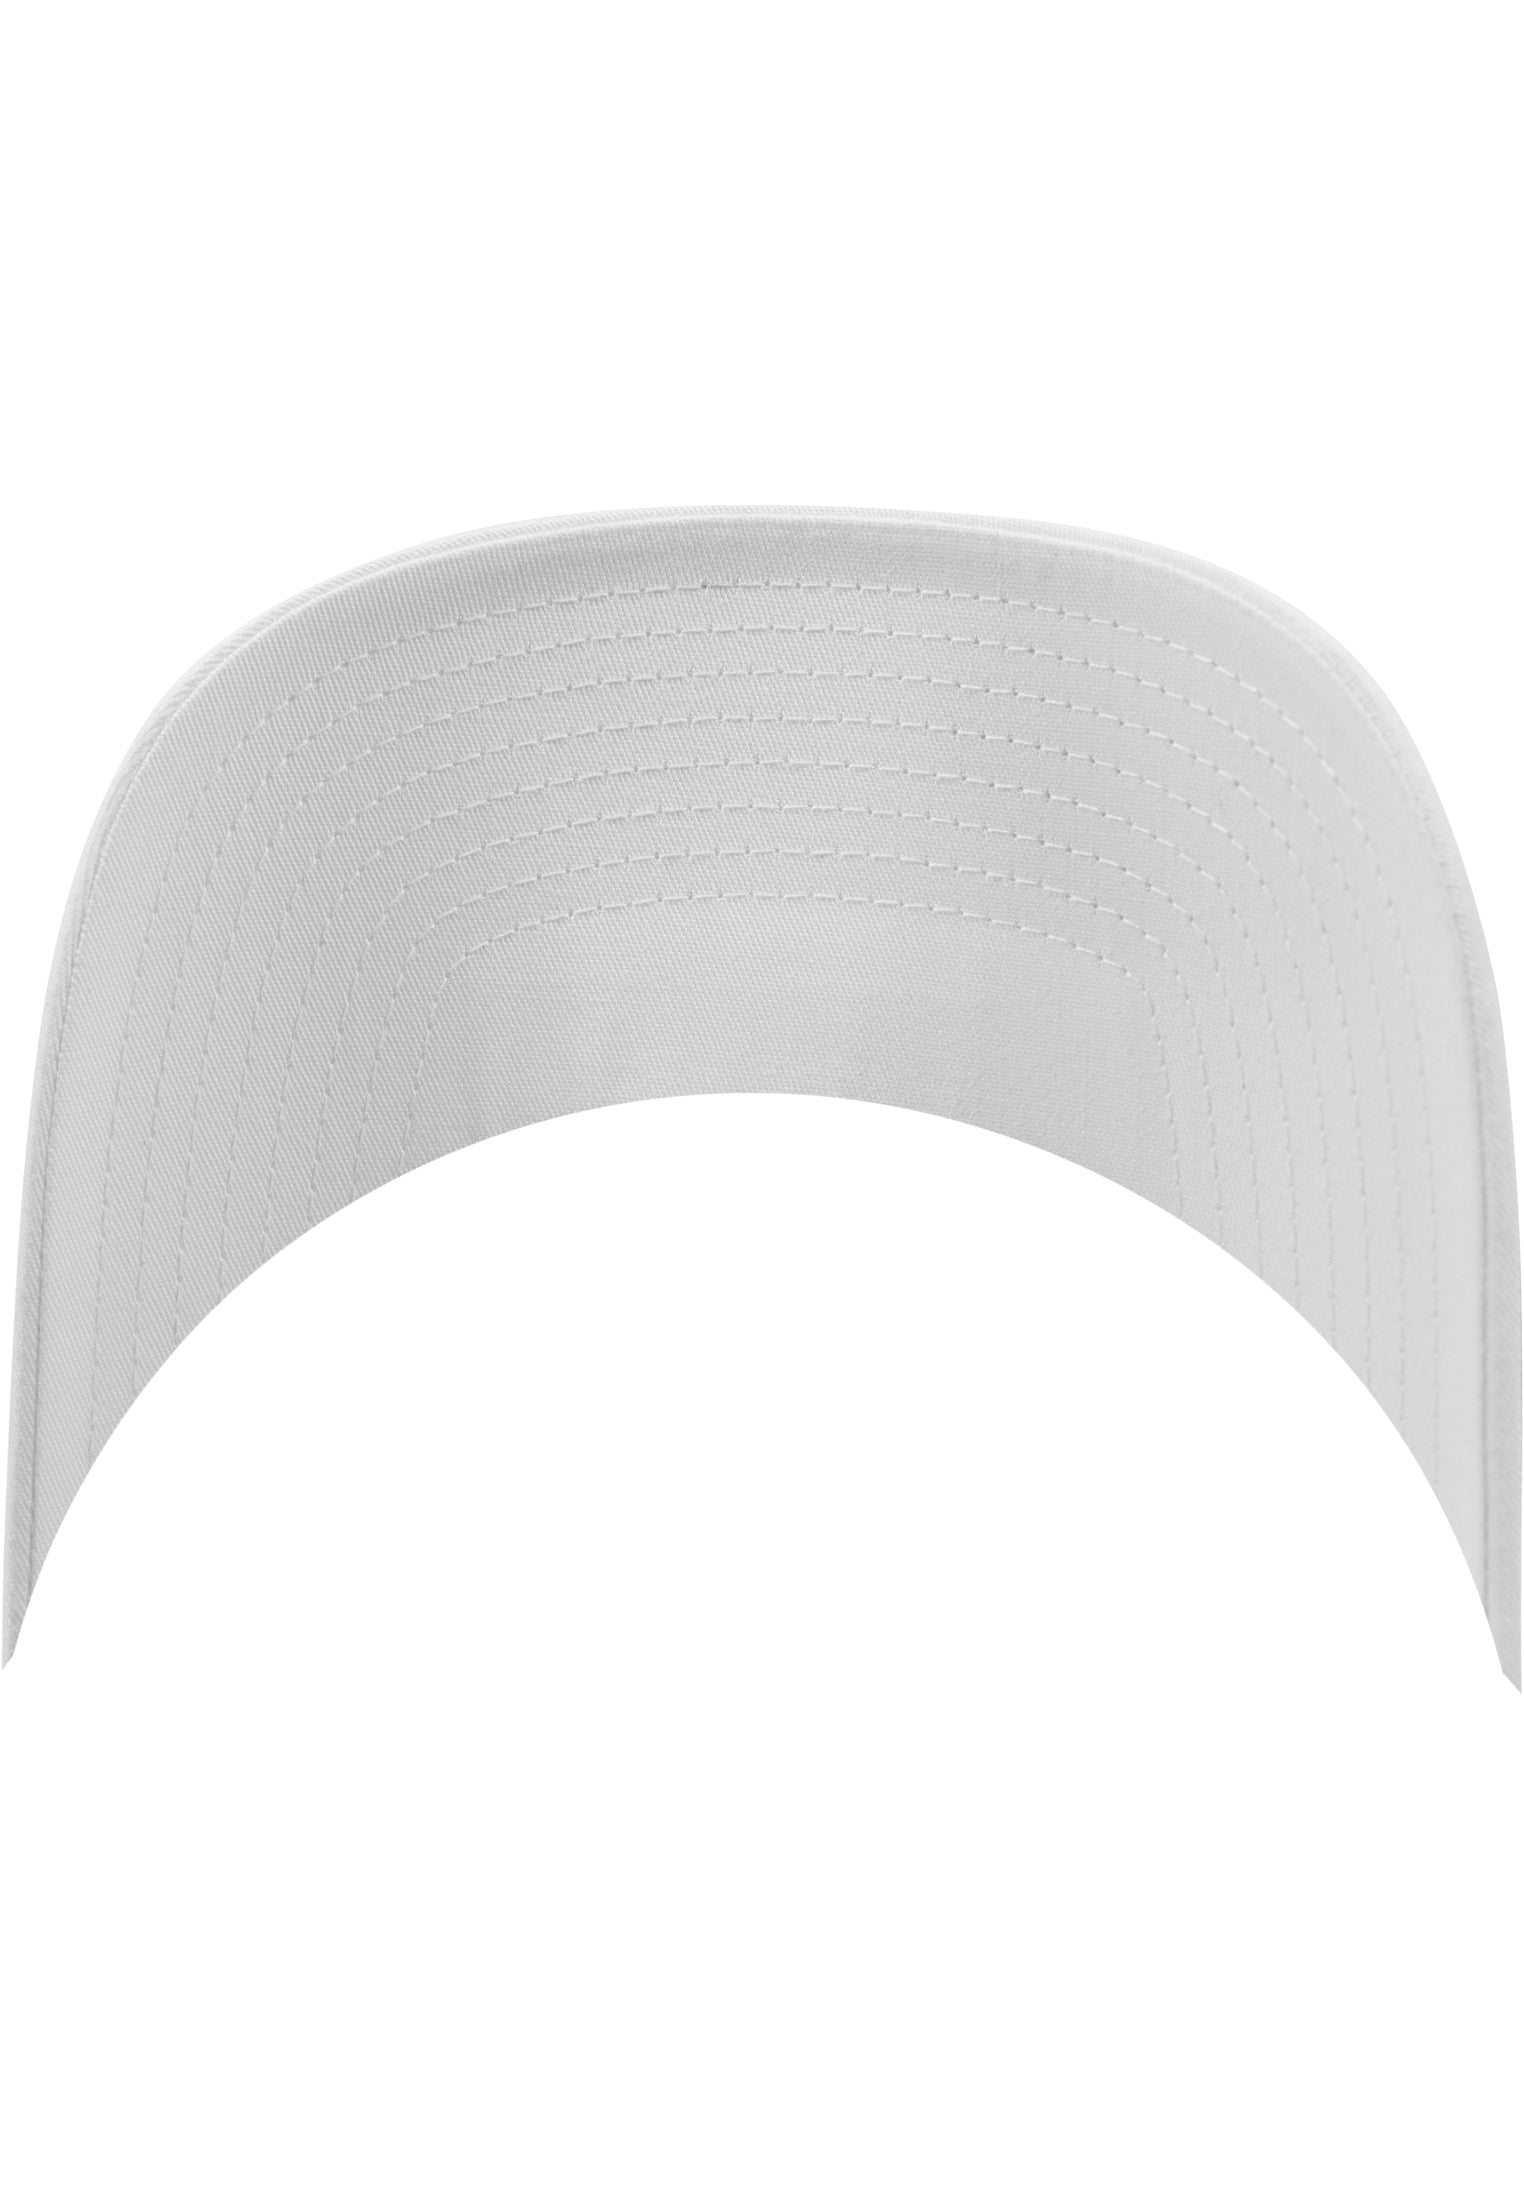 Curved Classic Snapback - White - Headz Up 